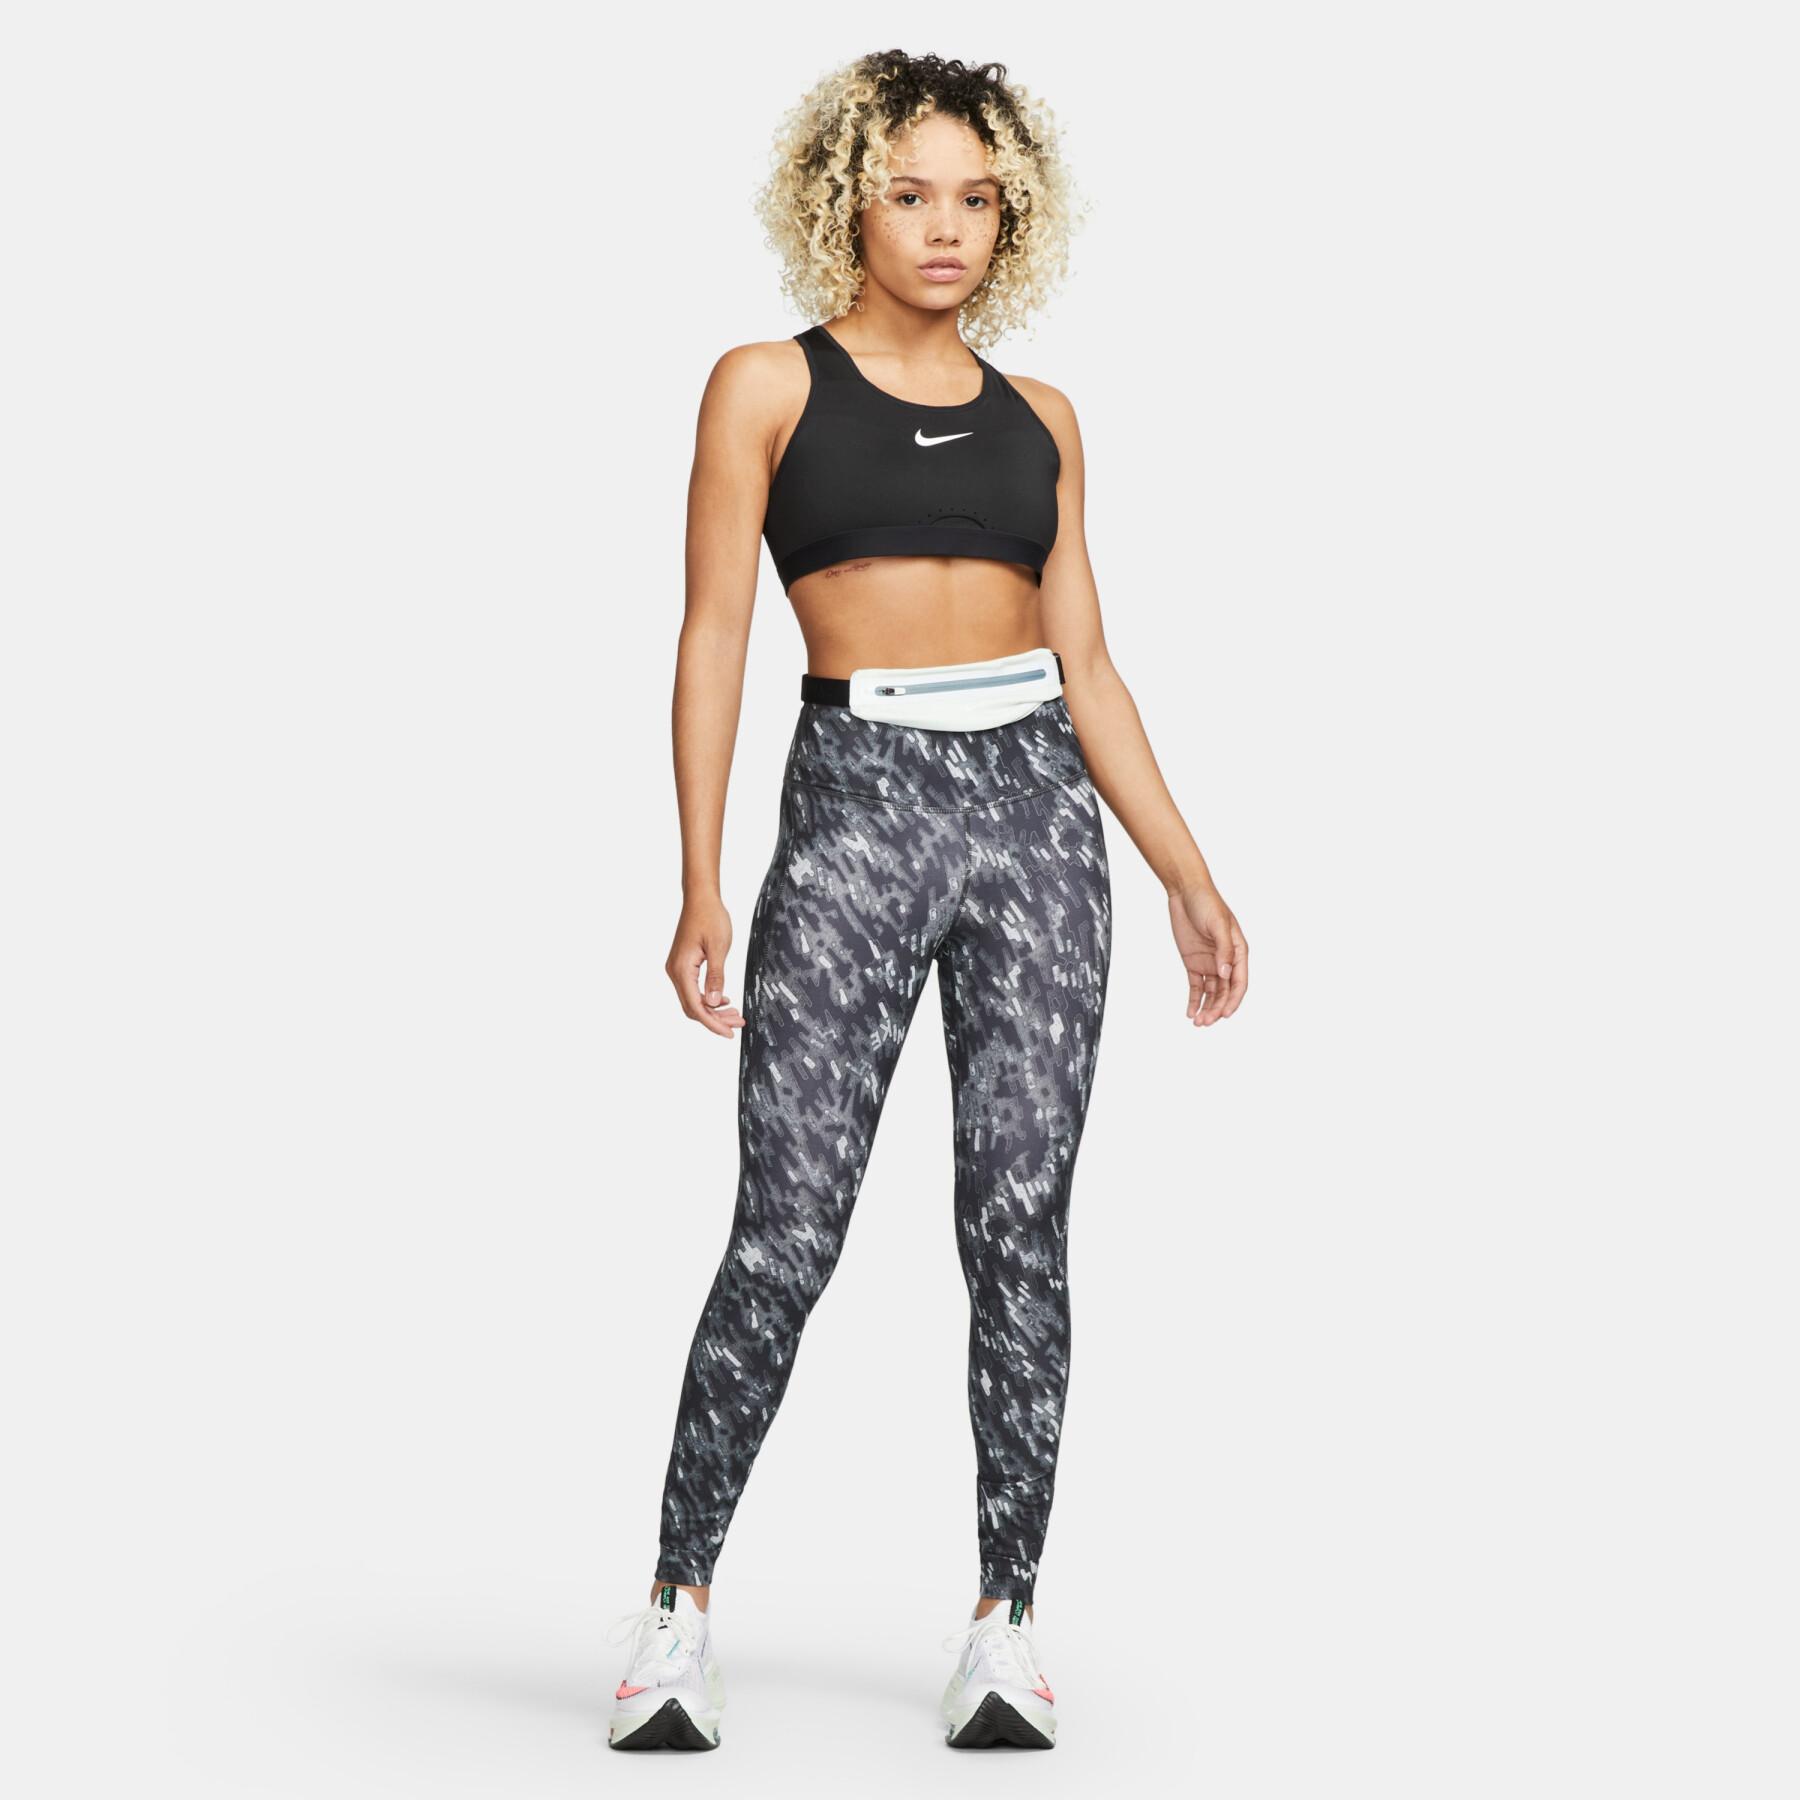 Dri-fit fast cropped running leggings, black/grey, Nike